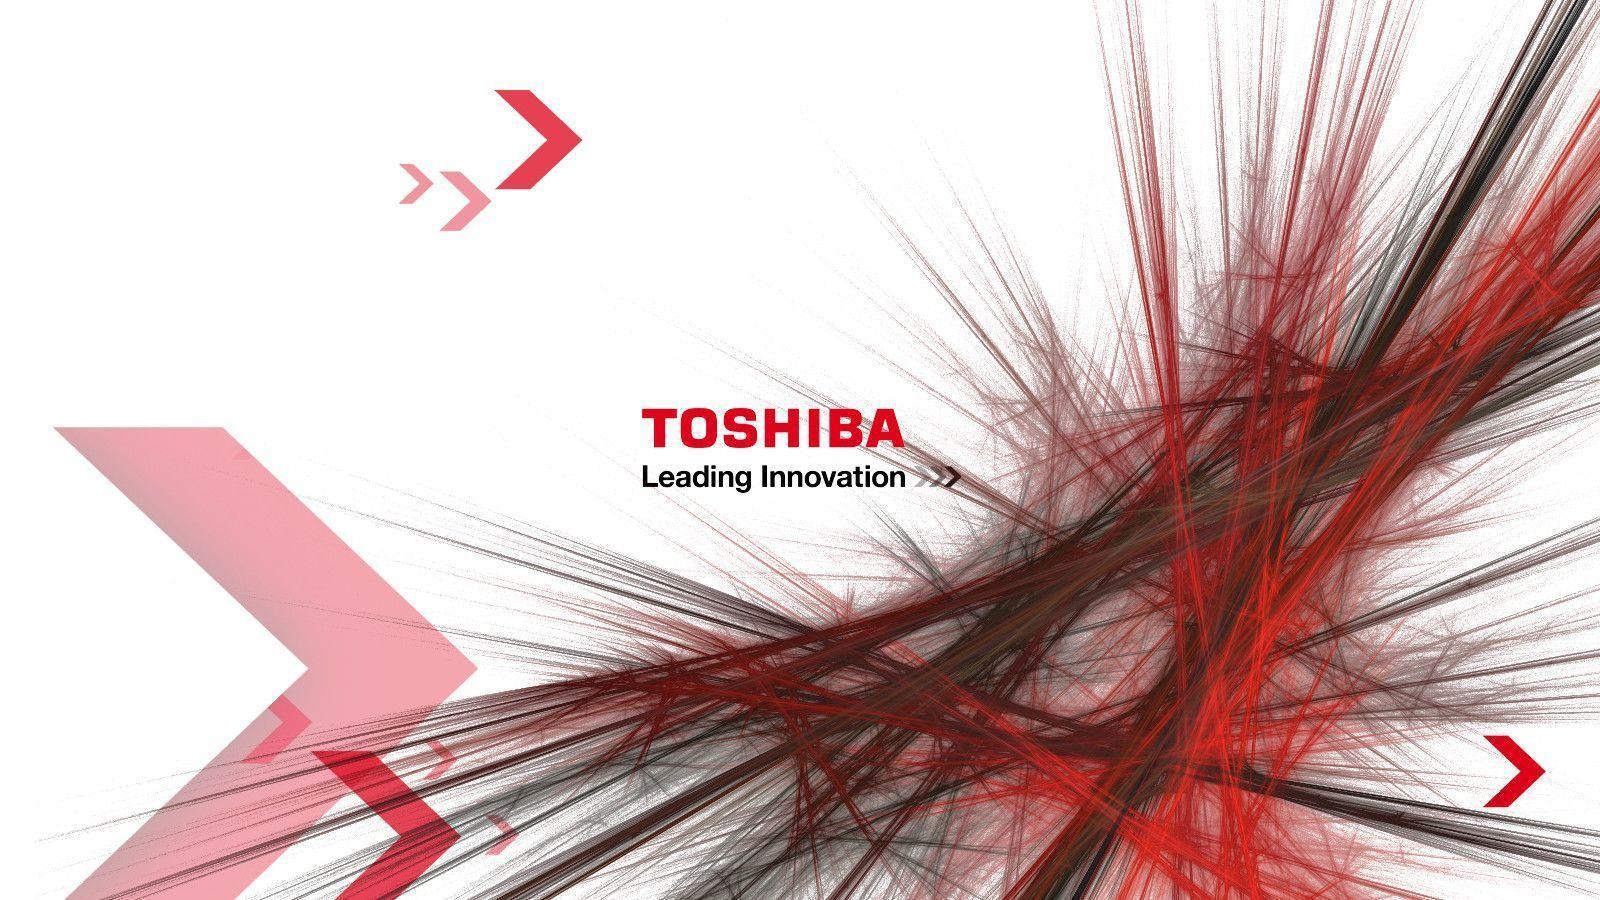 Toshiba Wallpaper Background HD 2015. Genovic